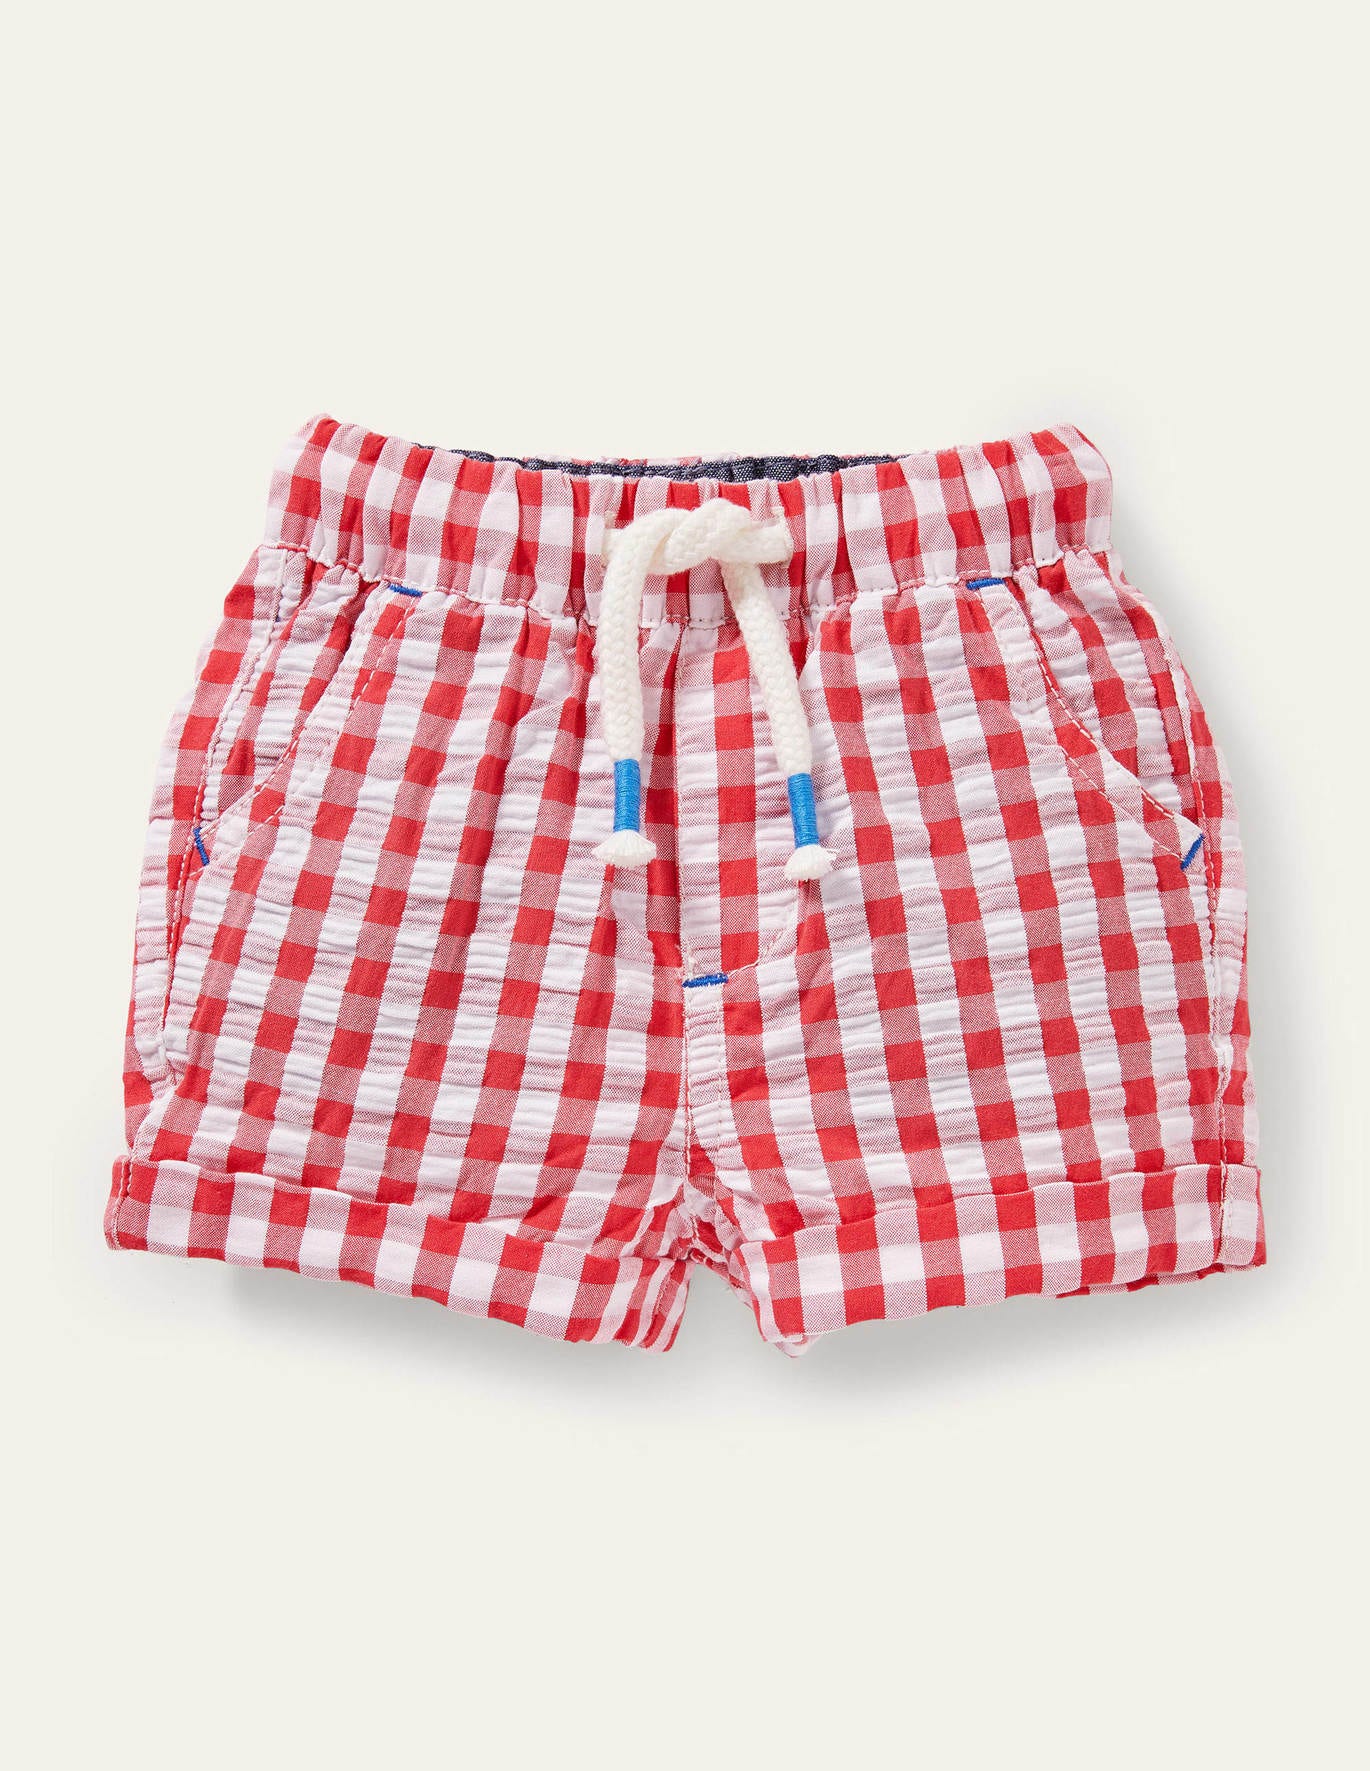 Boden Check Woven Shorts - Strawberry Tart Gingham